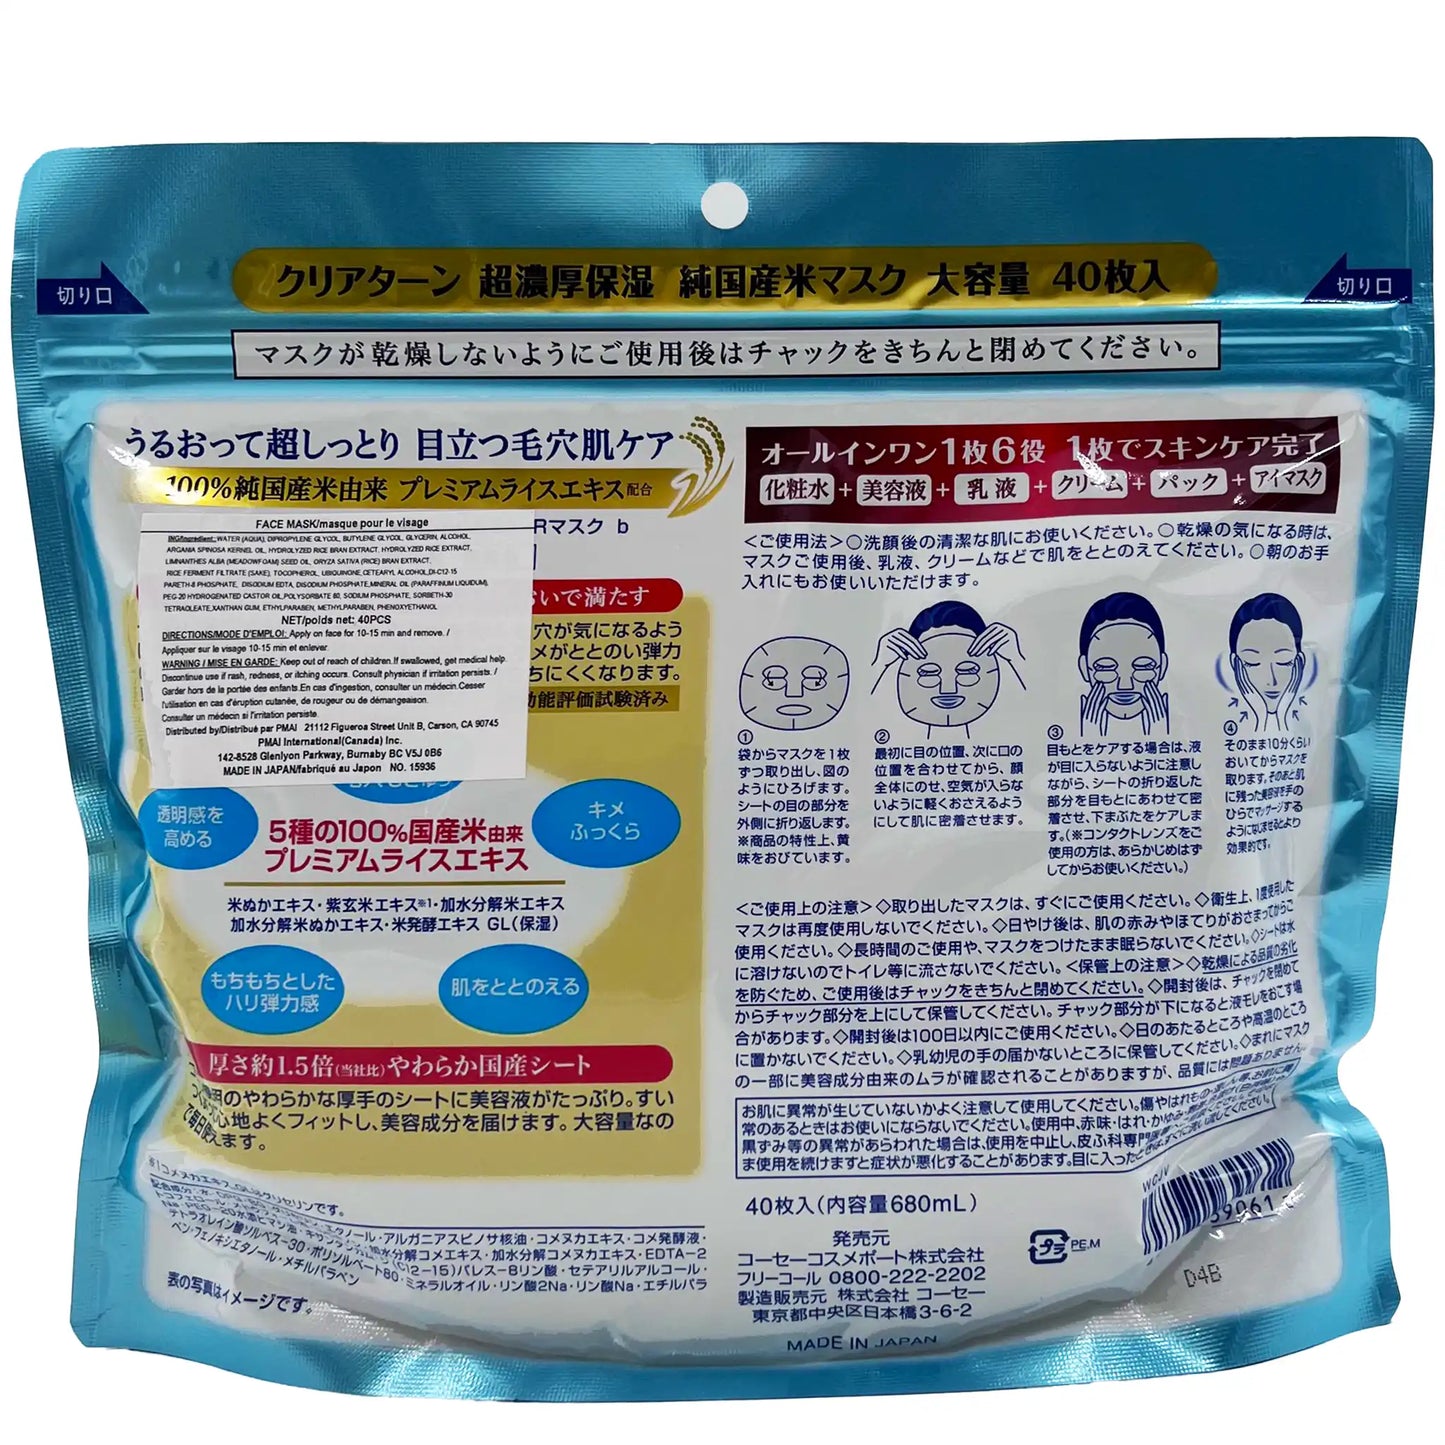 Kose Clear Turn Rice Mask Ex 40 Sheet